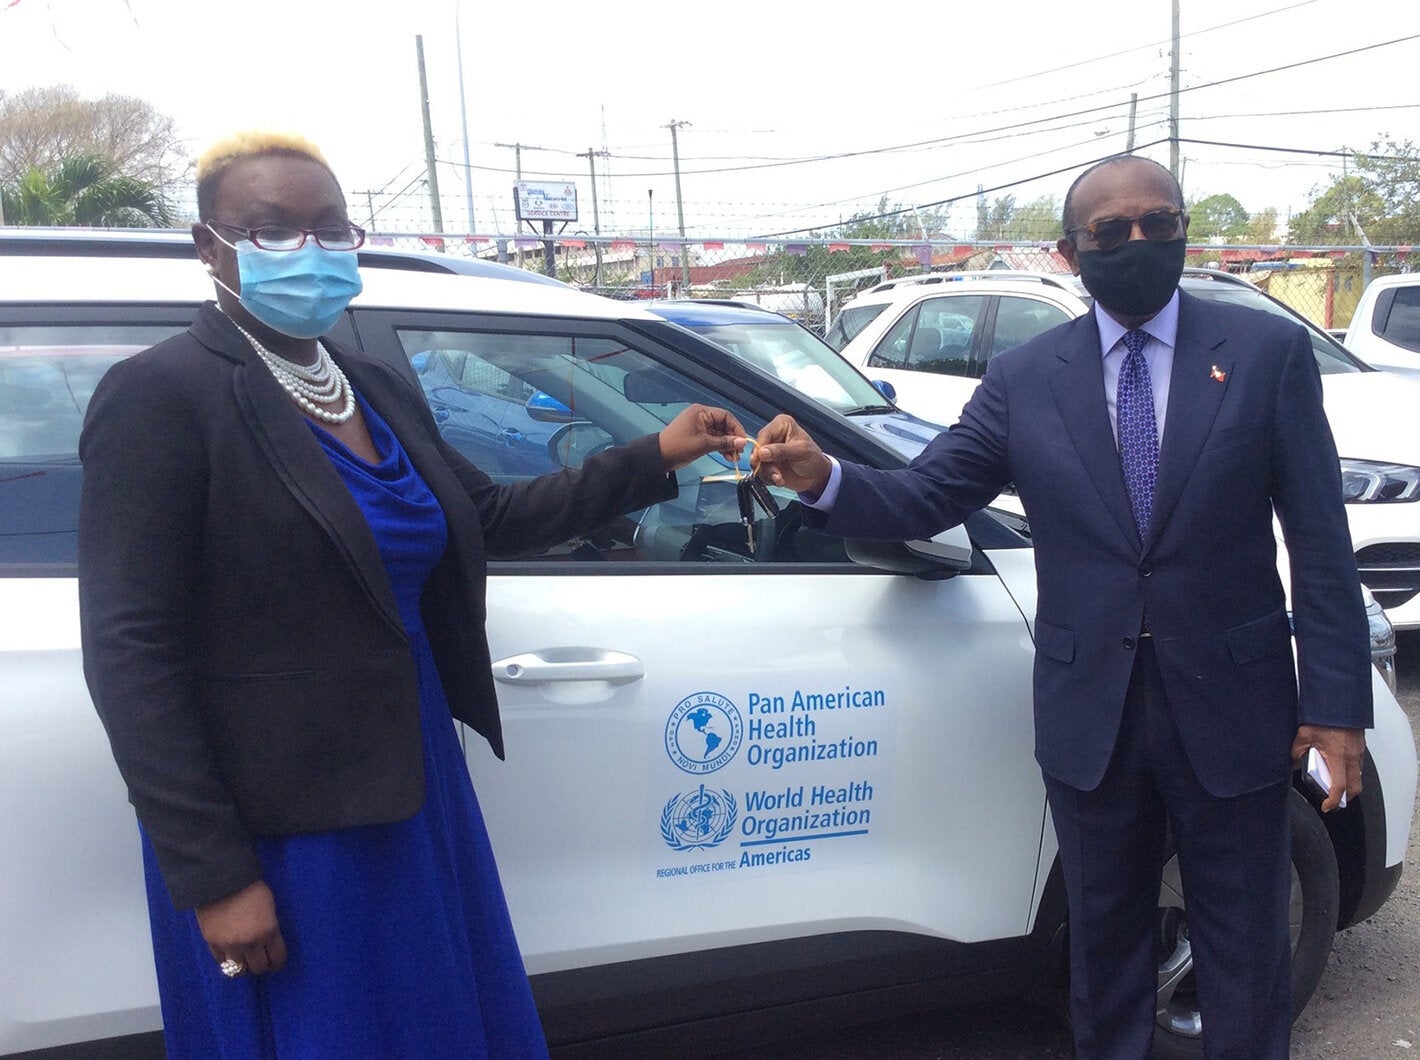 PAHO donation of vehicle to Antigua and Barbuda